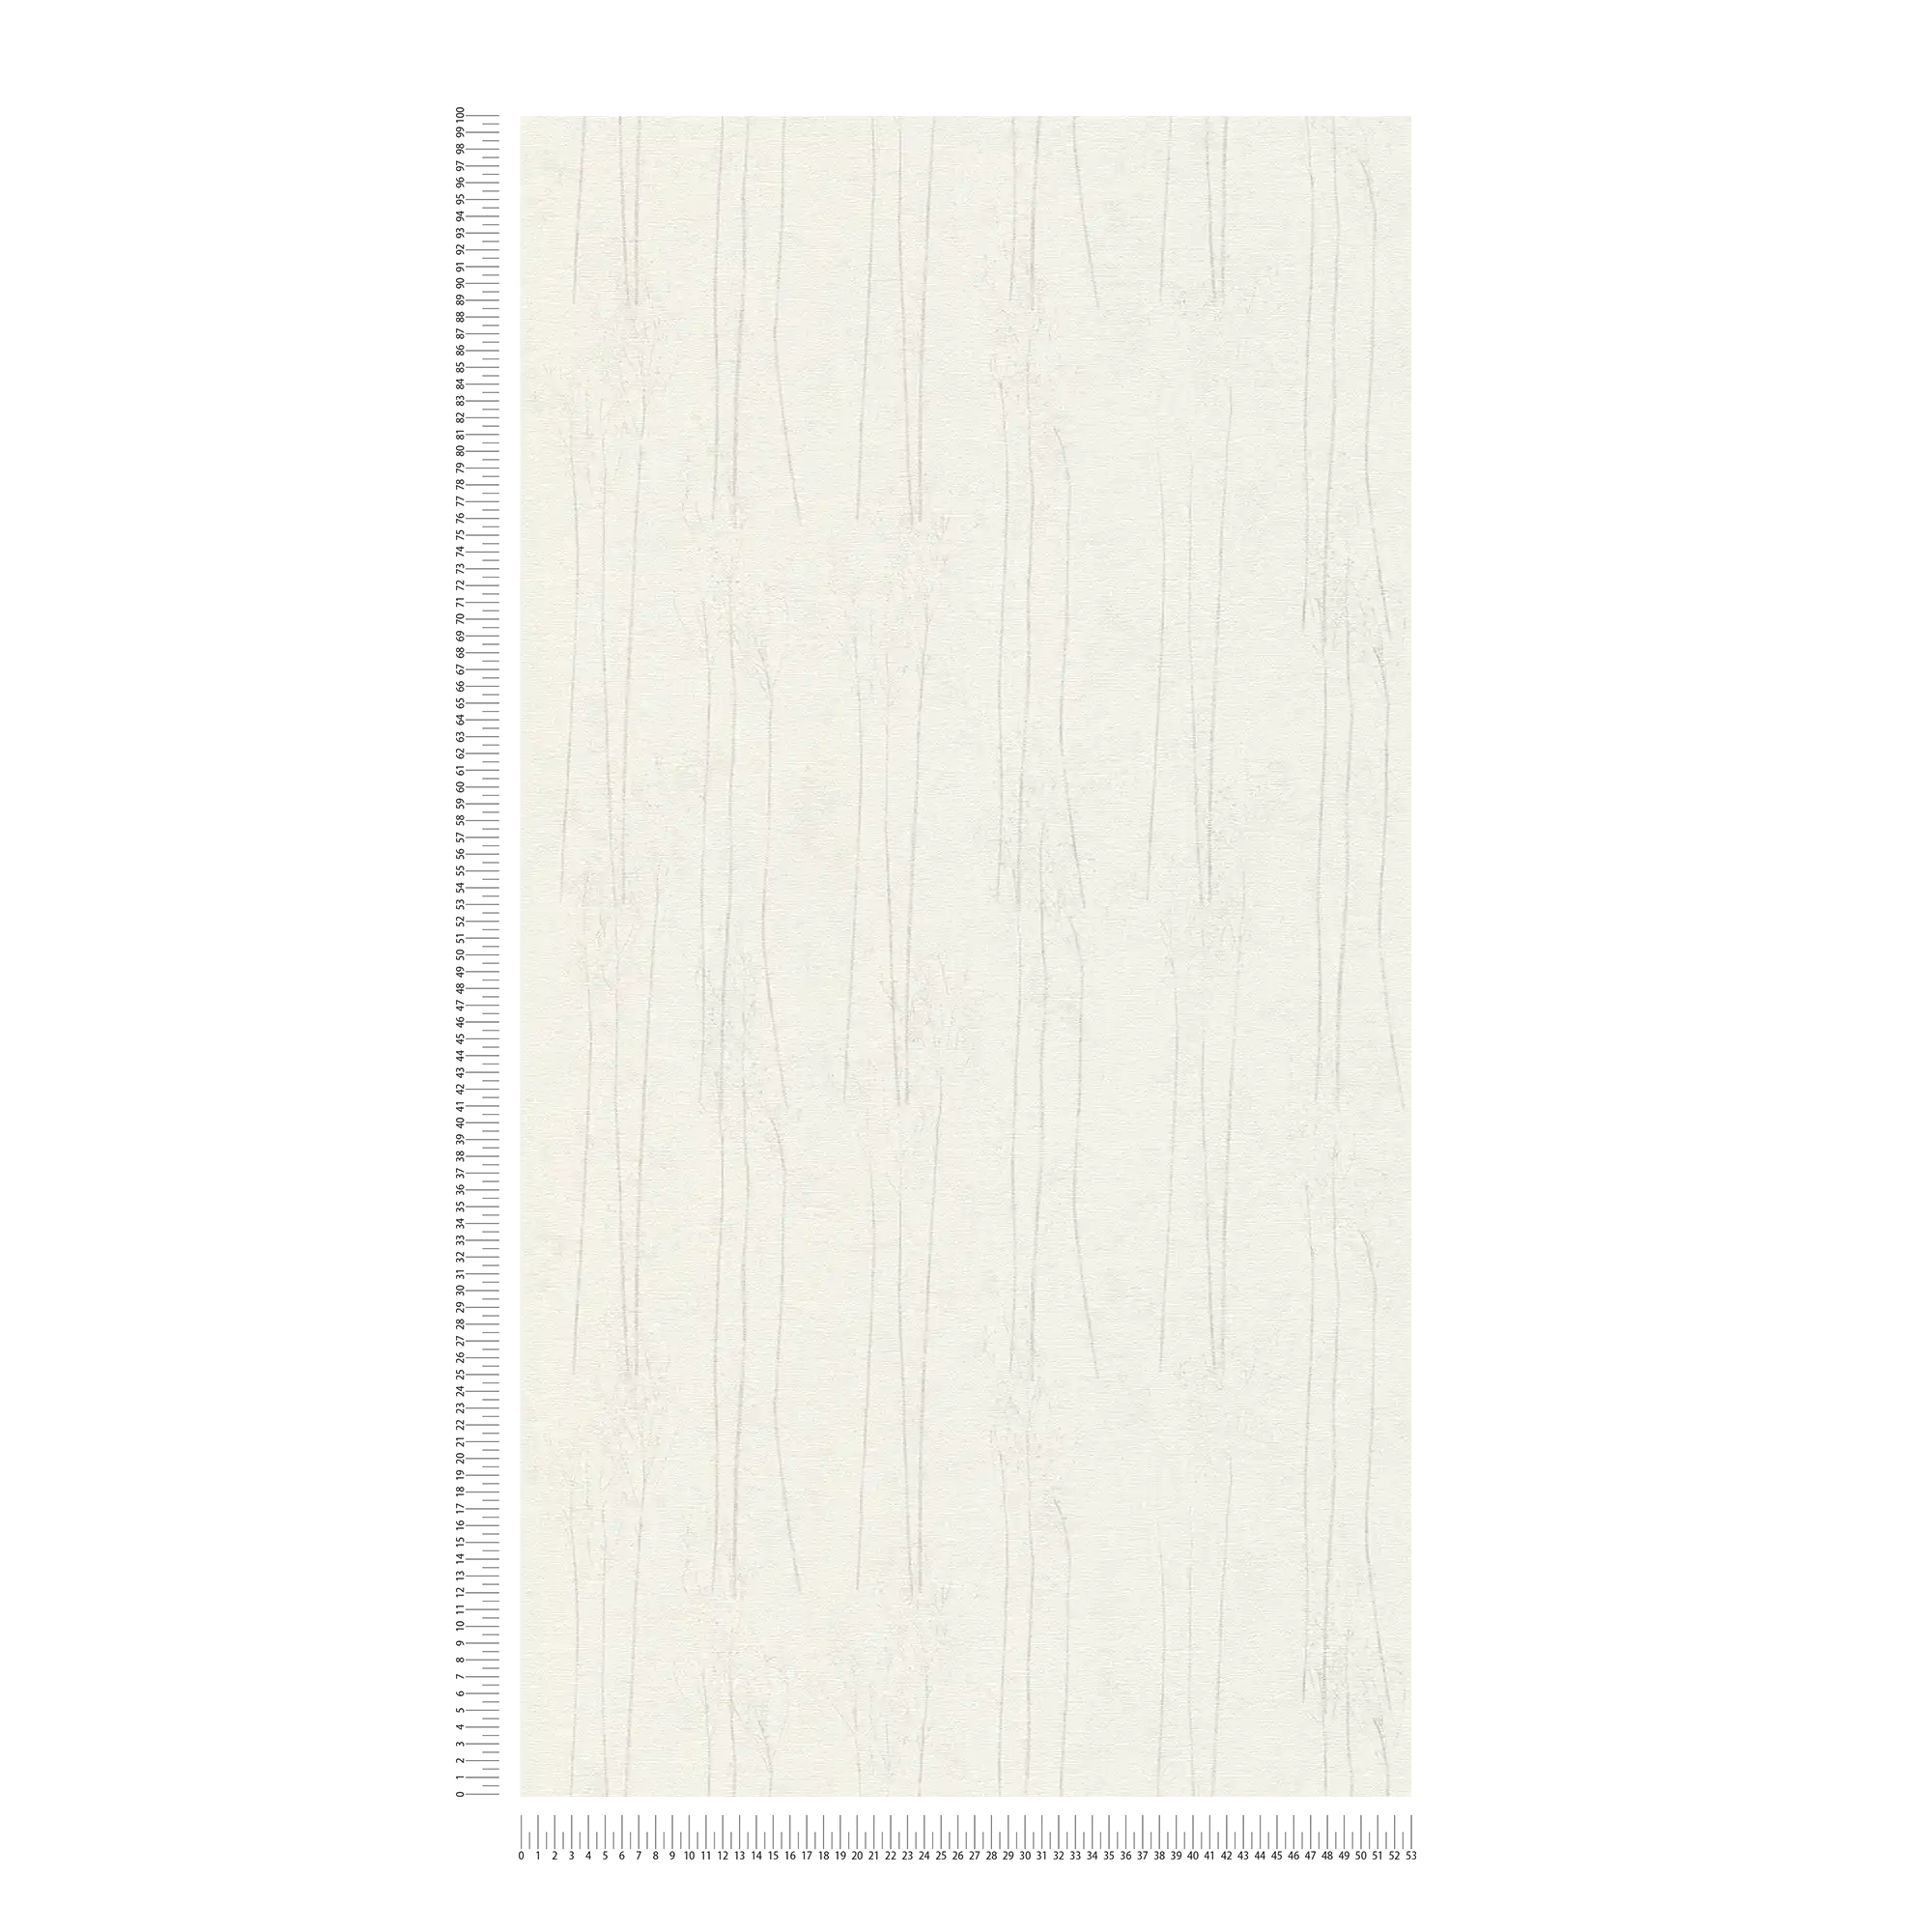             Carta da parati bianca in stile Scandi con motivi naturali - grigio, bianco
        